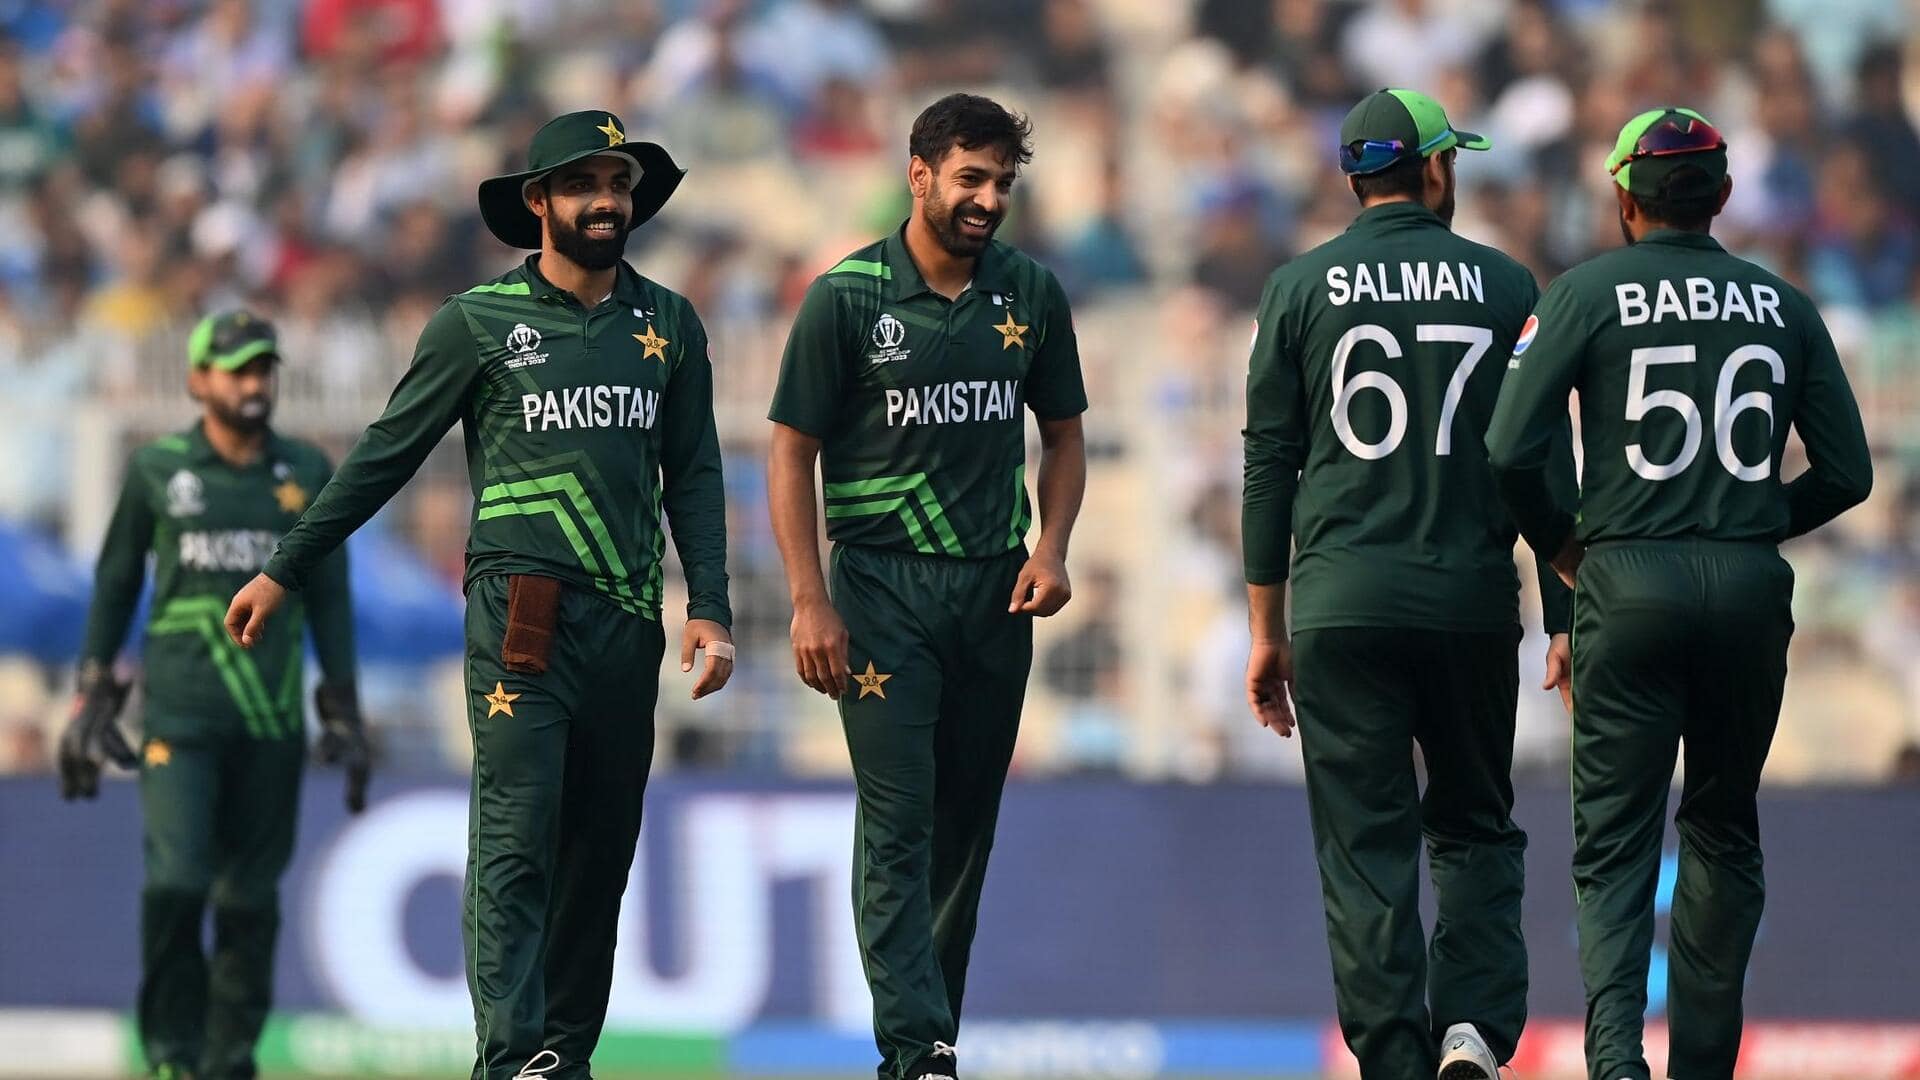 Pakistan's Haris Rauf scripts an unwanted ODI World Cup record